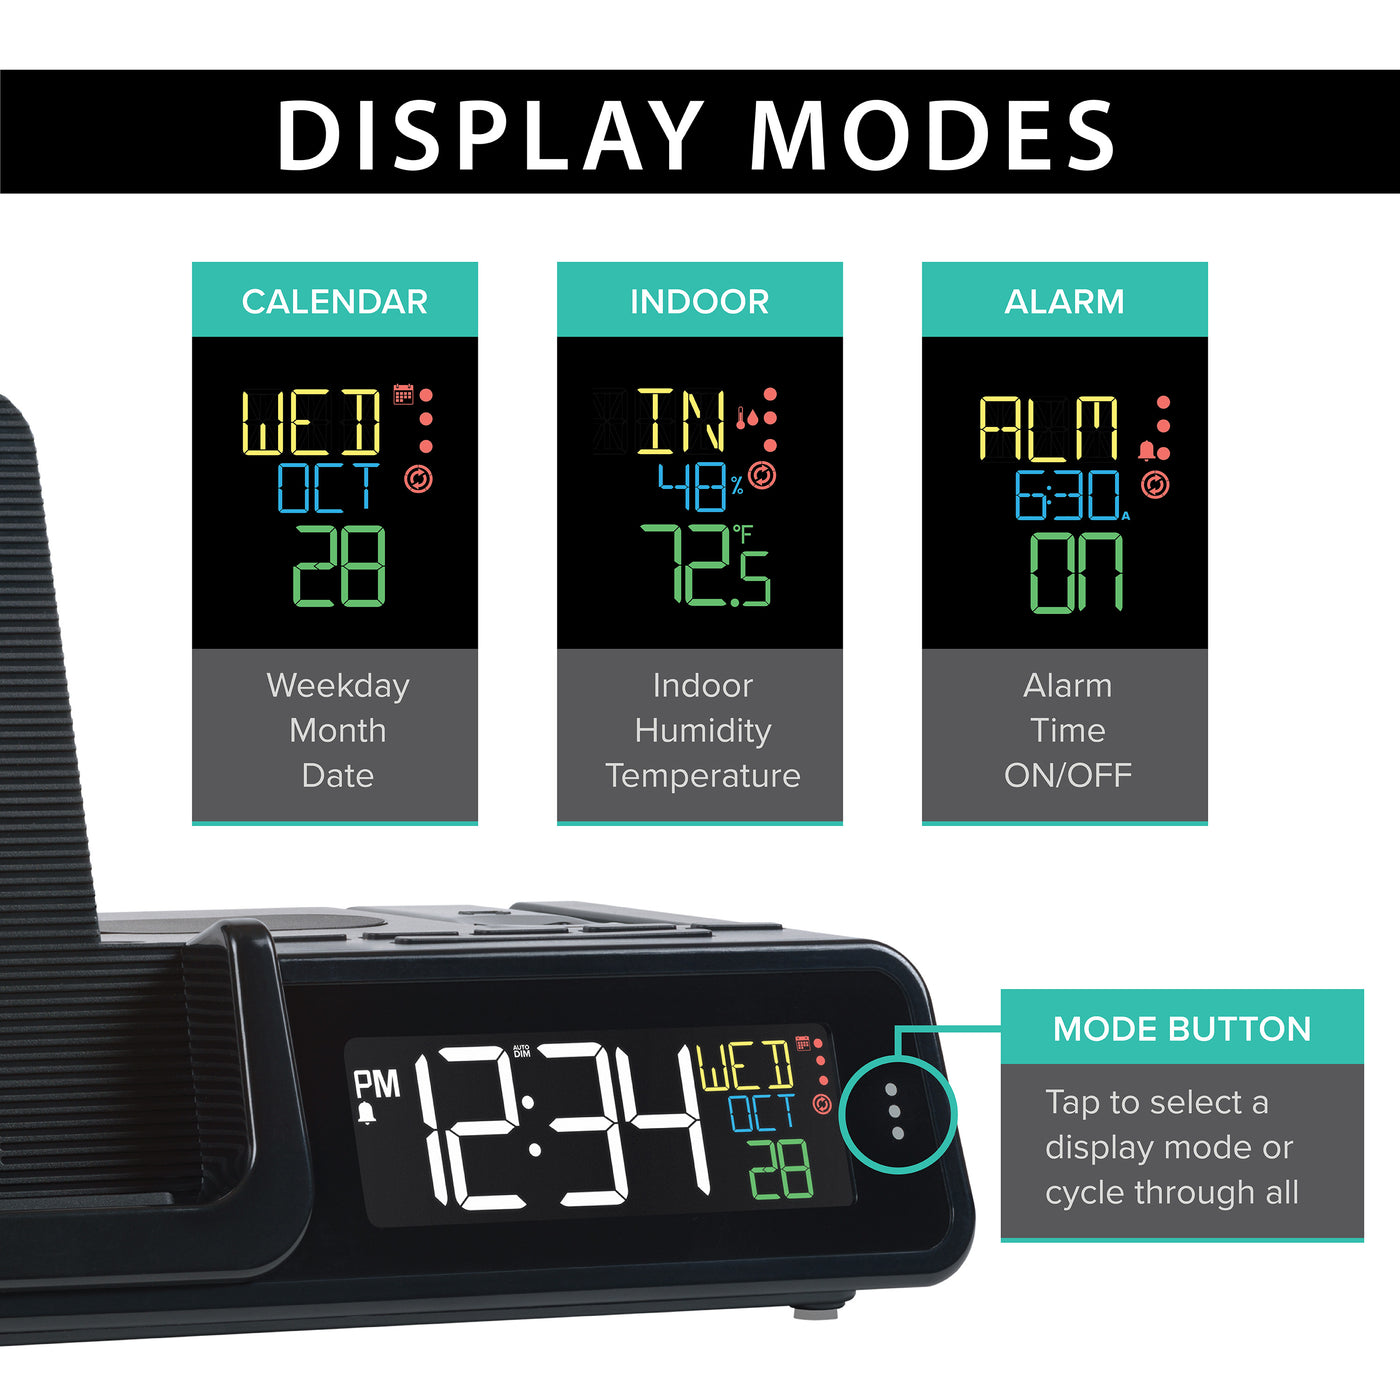 C75709 projection alarm display modes